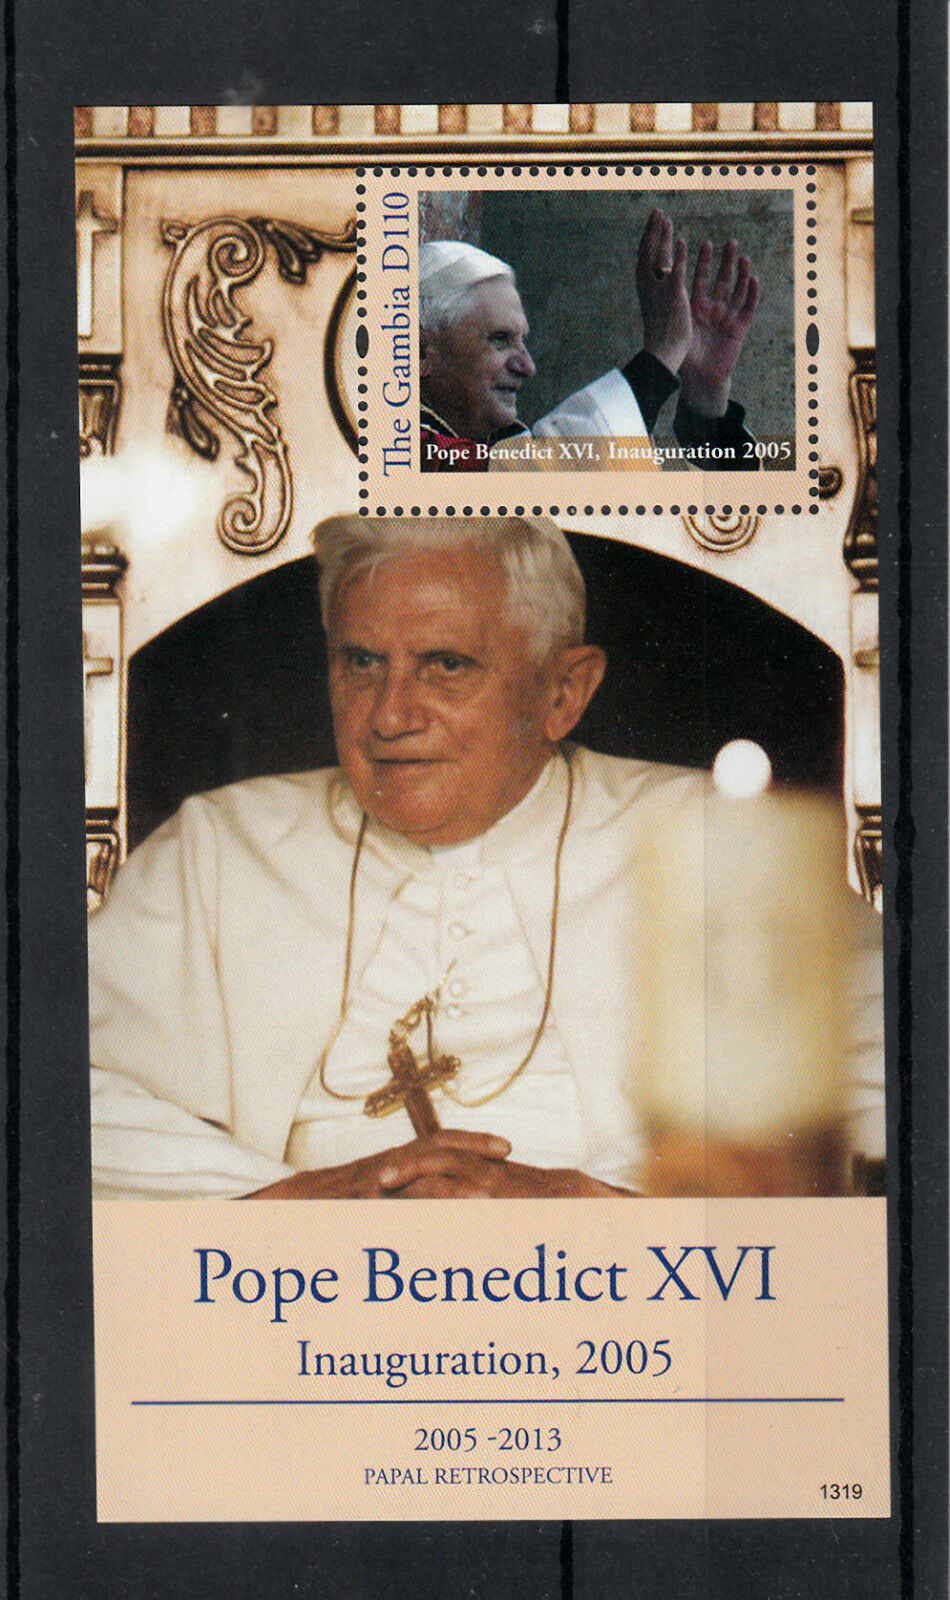 Gambia 2013 MNH Papal Retrospective Pope Benedict XVI Inauguration 2005 1v S/S